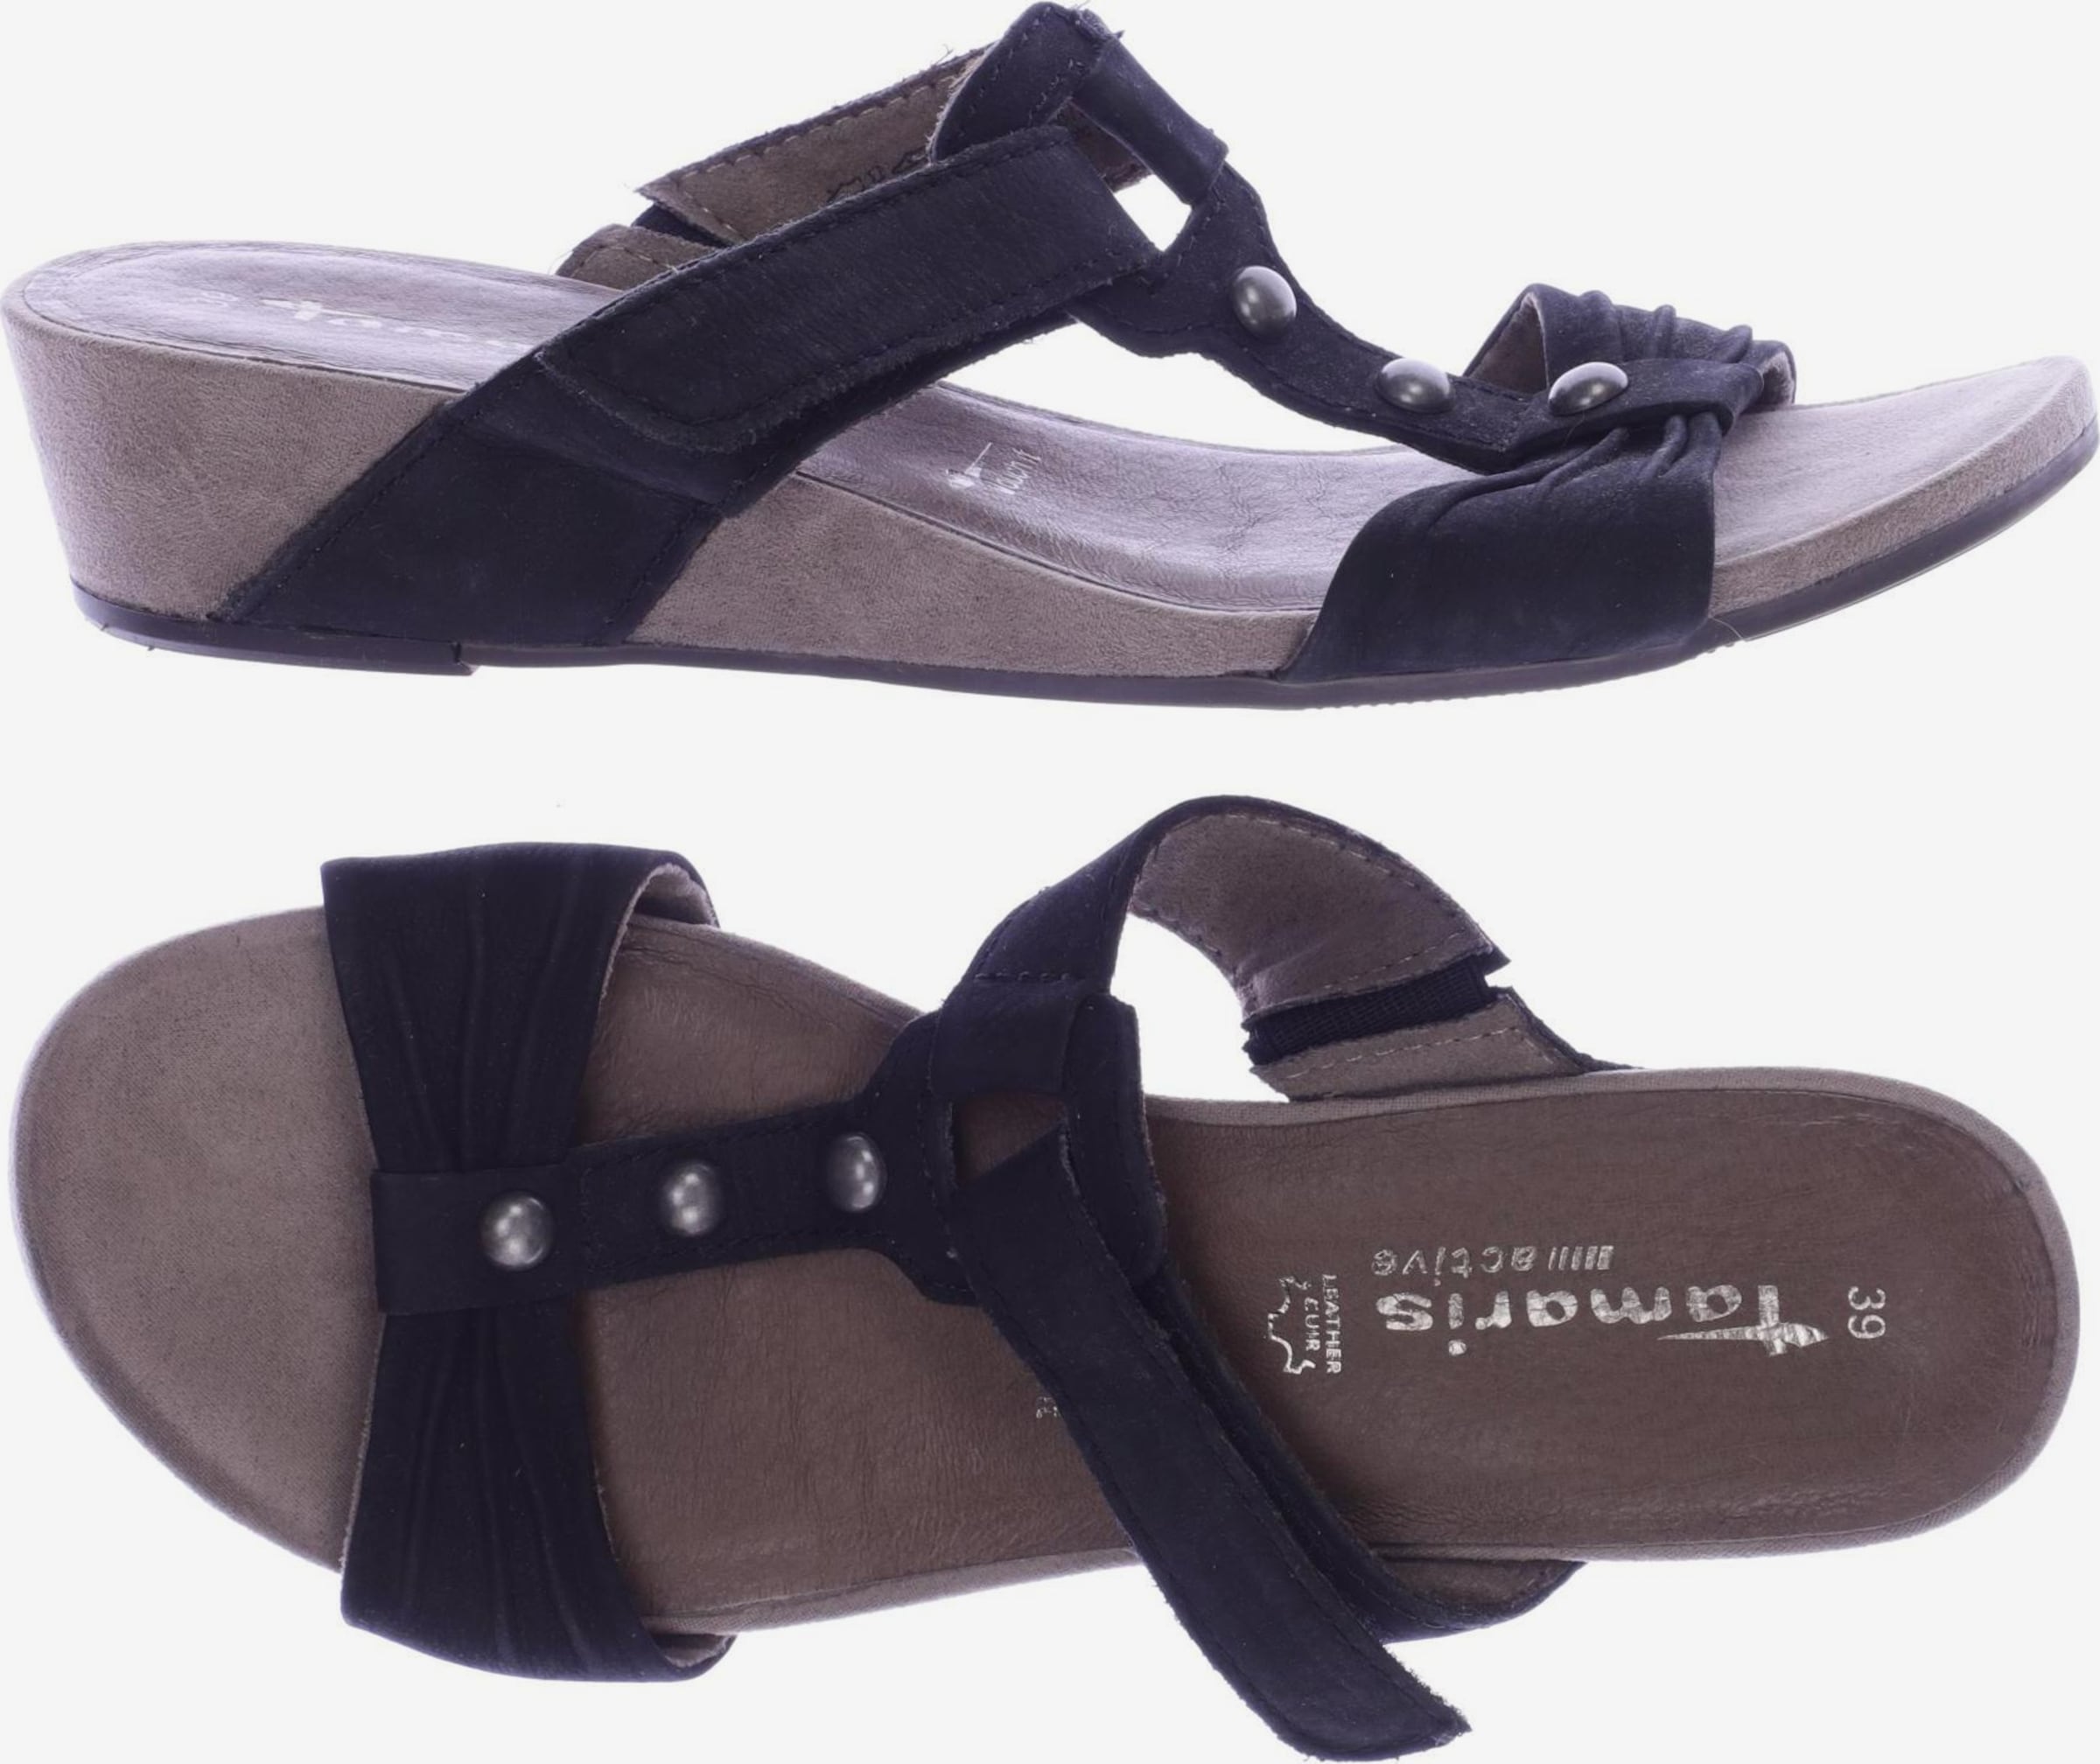 TAMARIS Sandals & High-Heeled Sandals in 39 in YOU